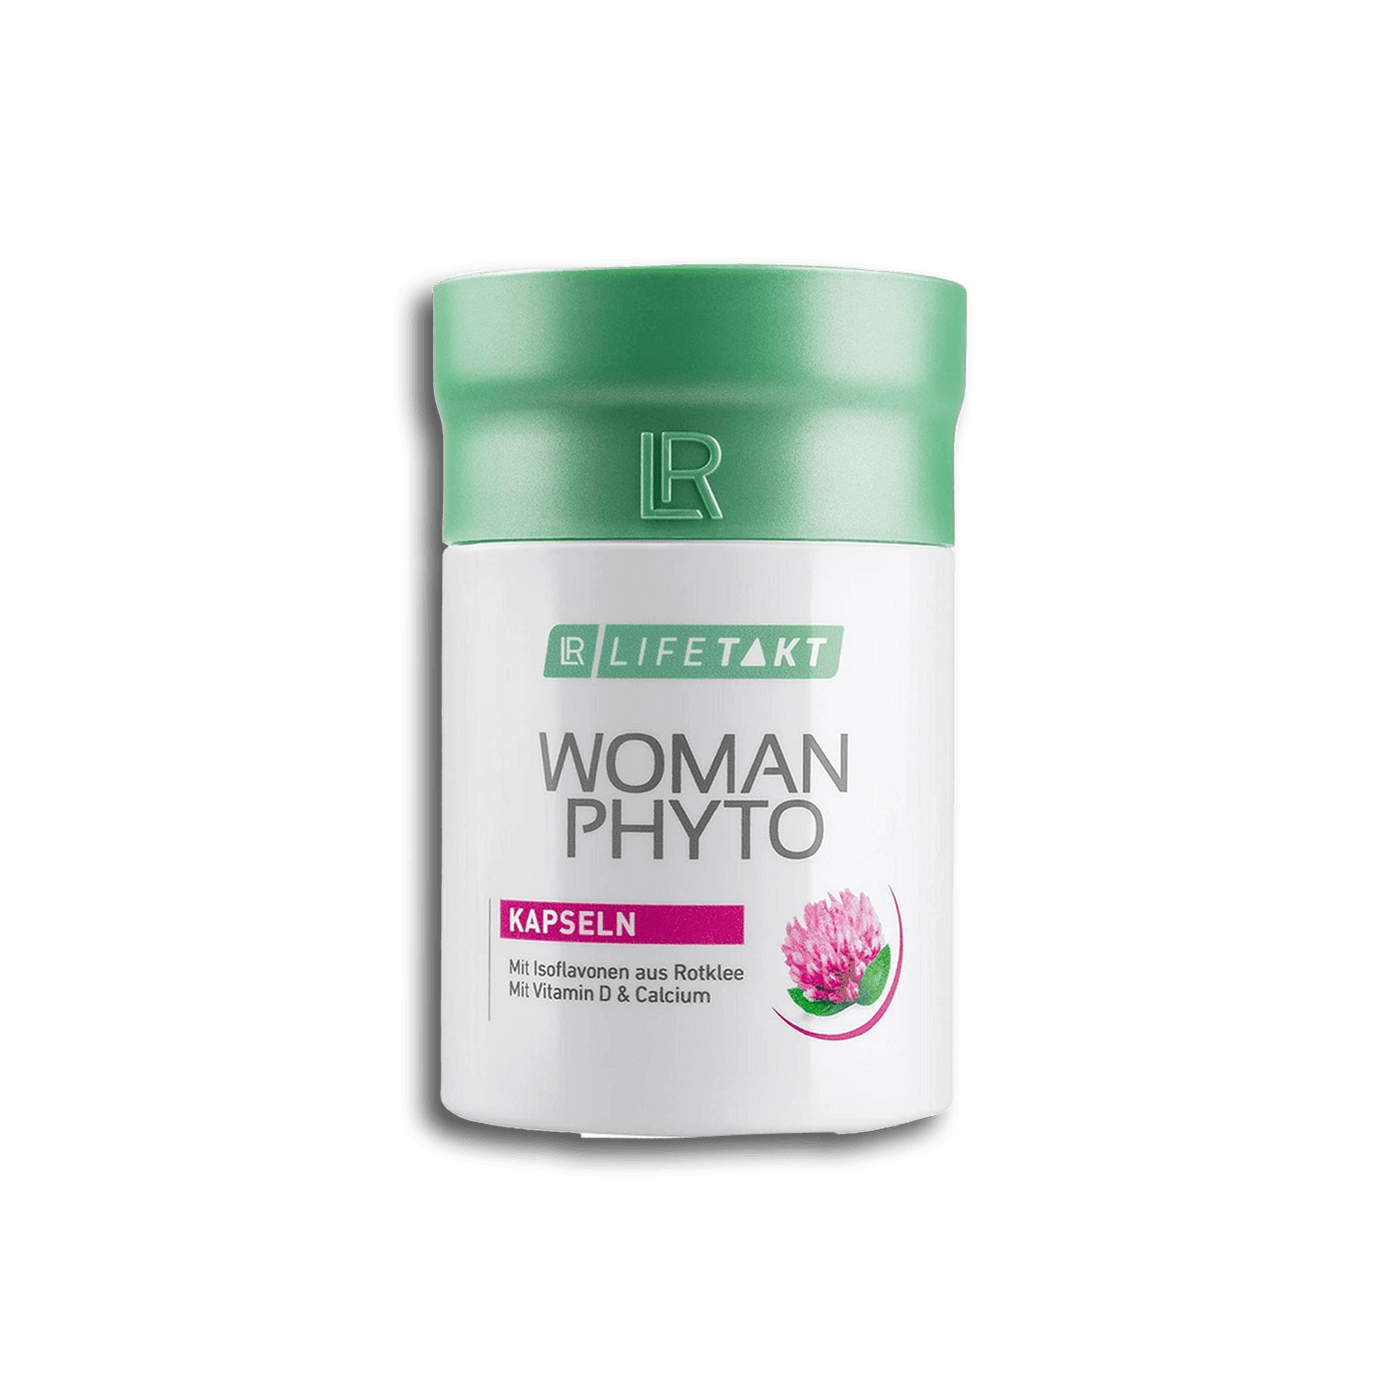 LR LIFETAKT Woman Phyto Kapseln Nahrungsergänzungsmittel 90 Kapseln - Genussleben